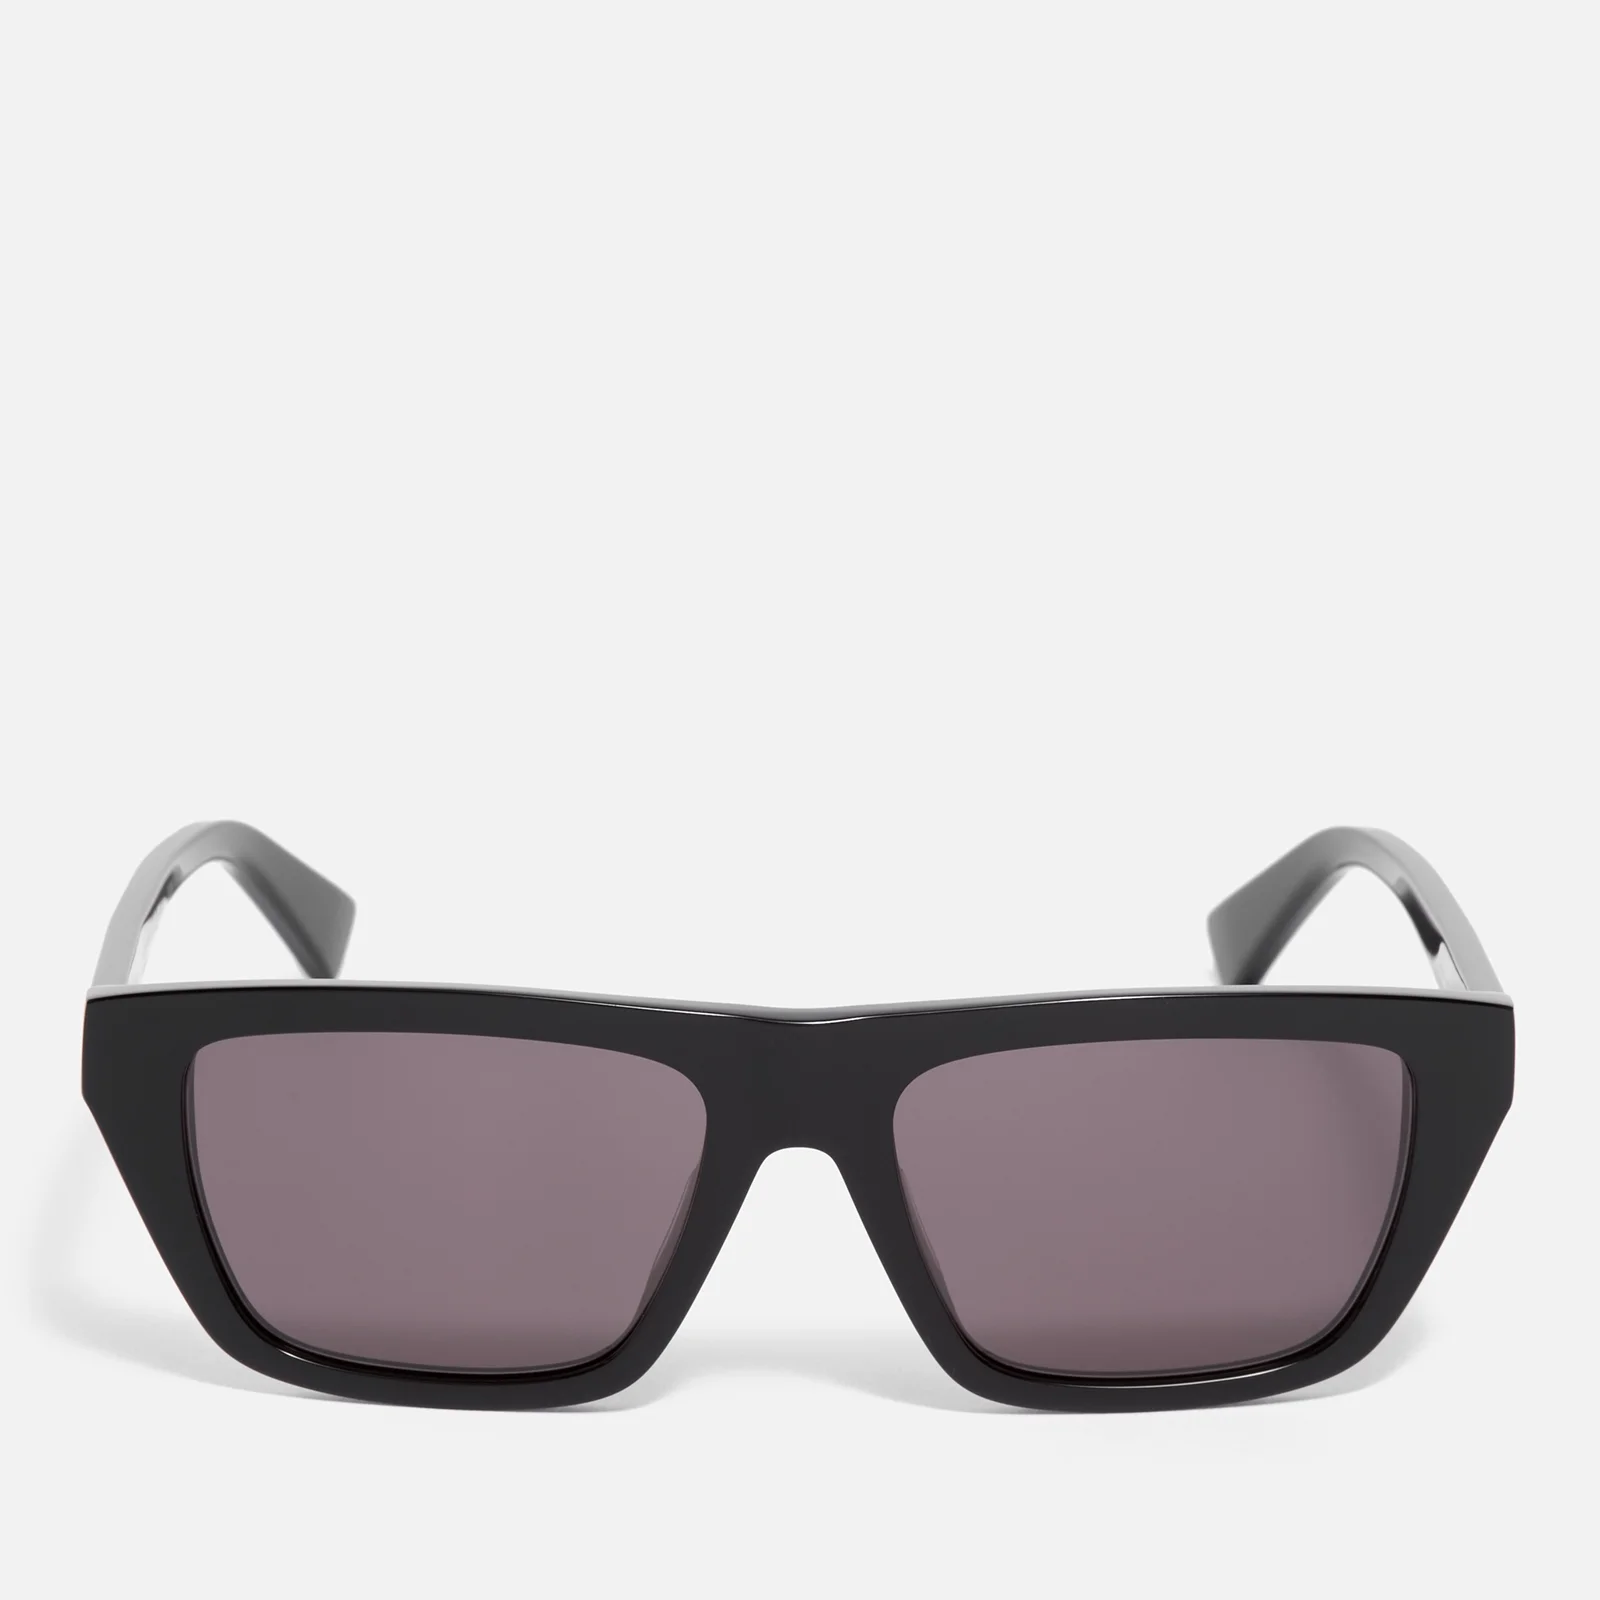 Bottega Veneta Studded Acetate Square-Frame Sunglasses Image 1